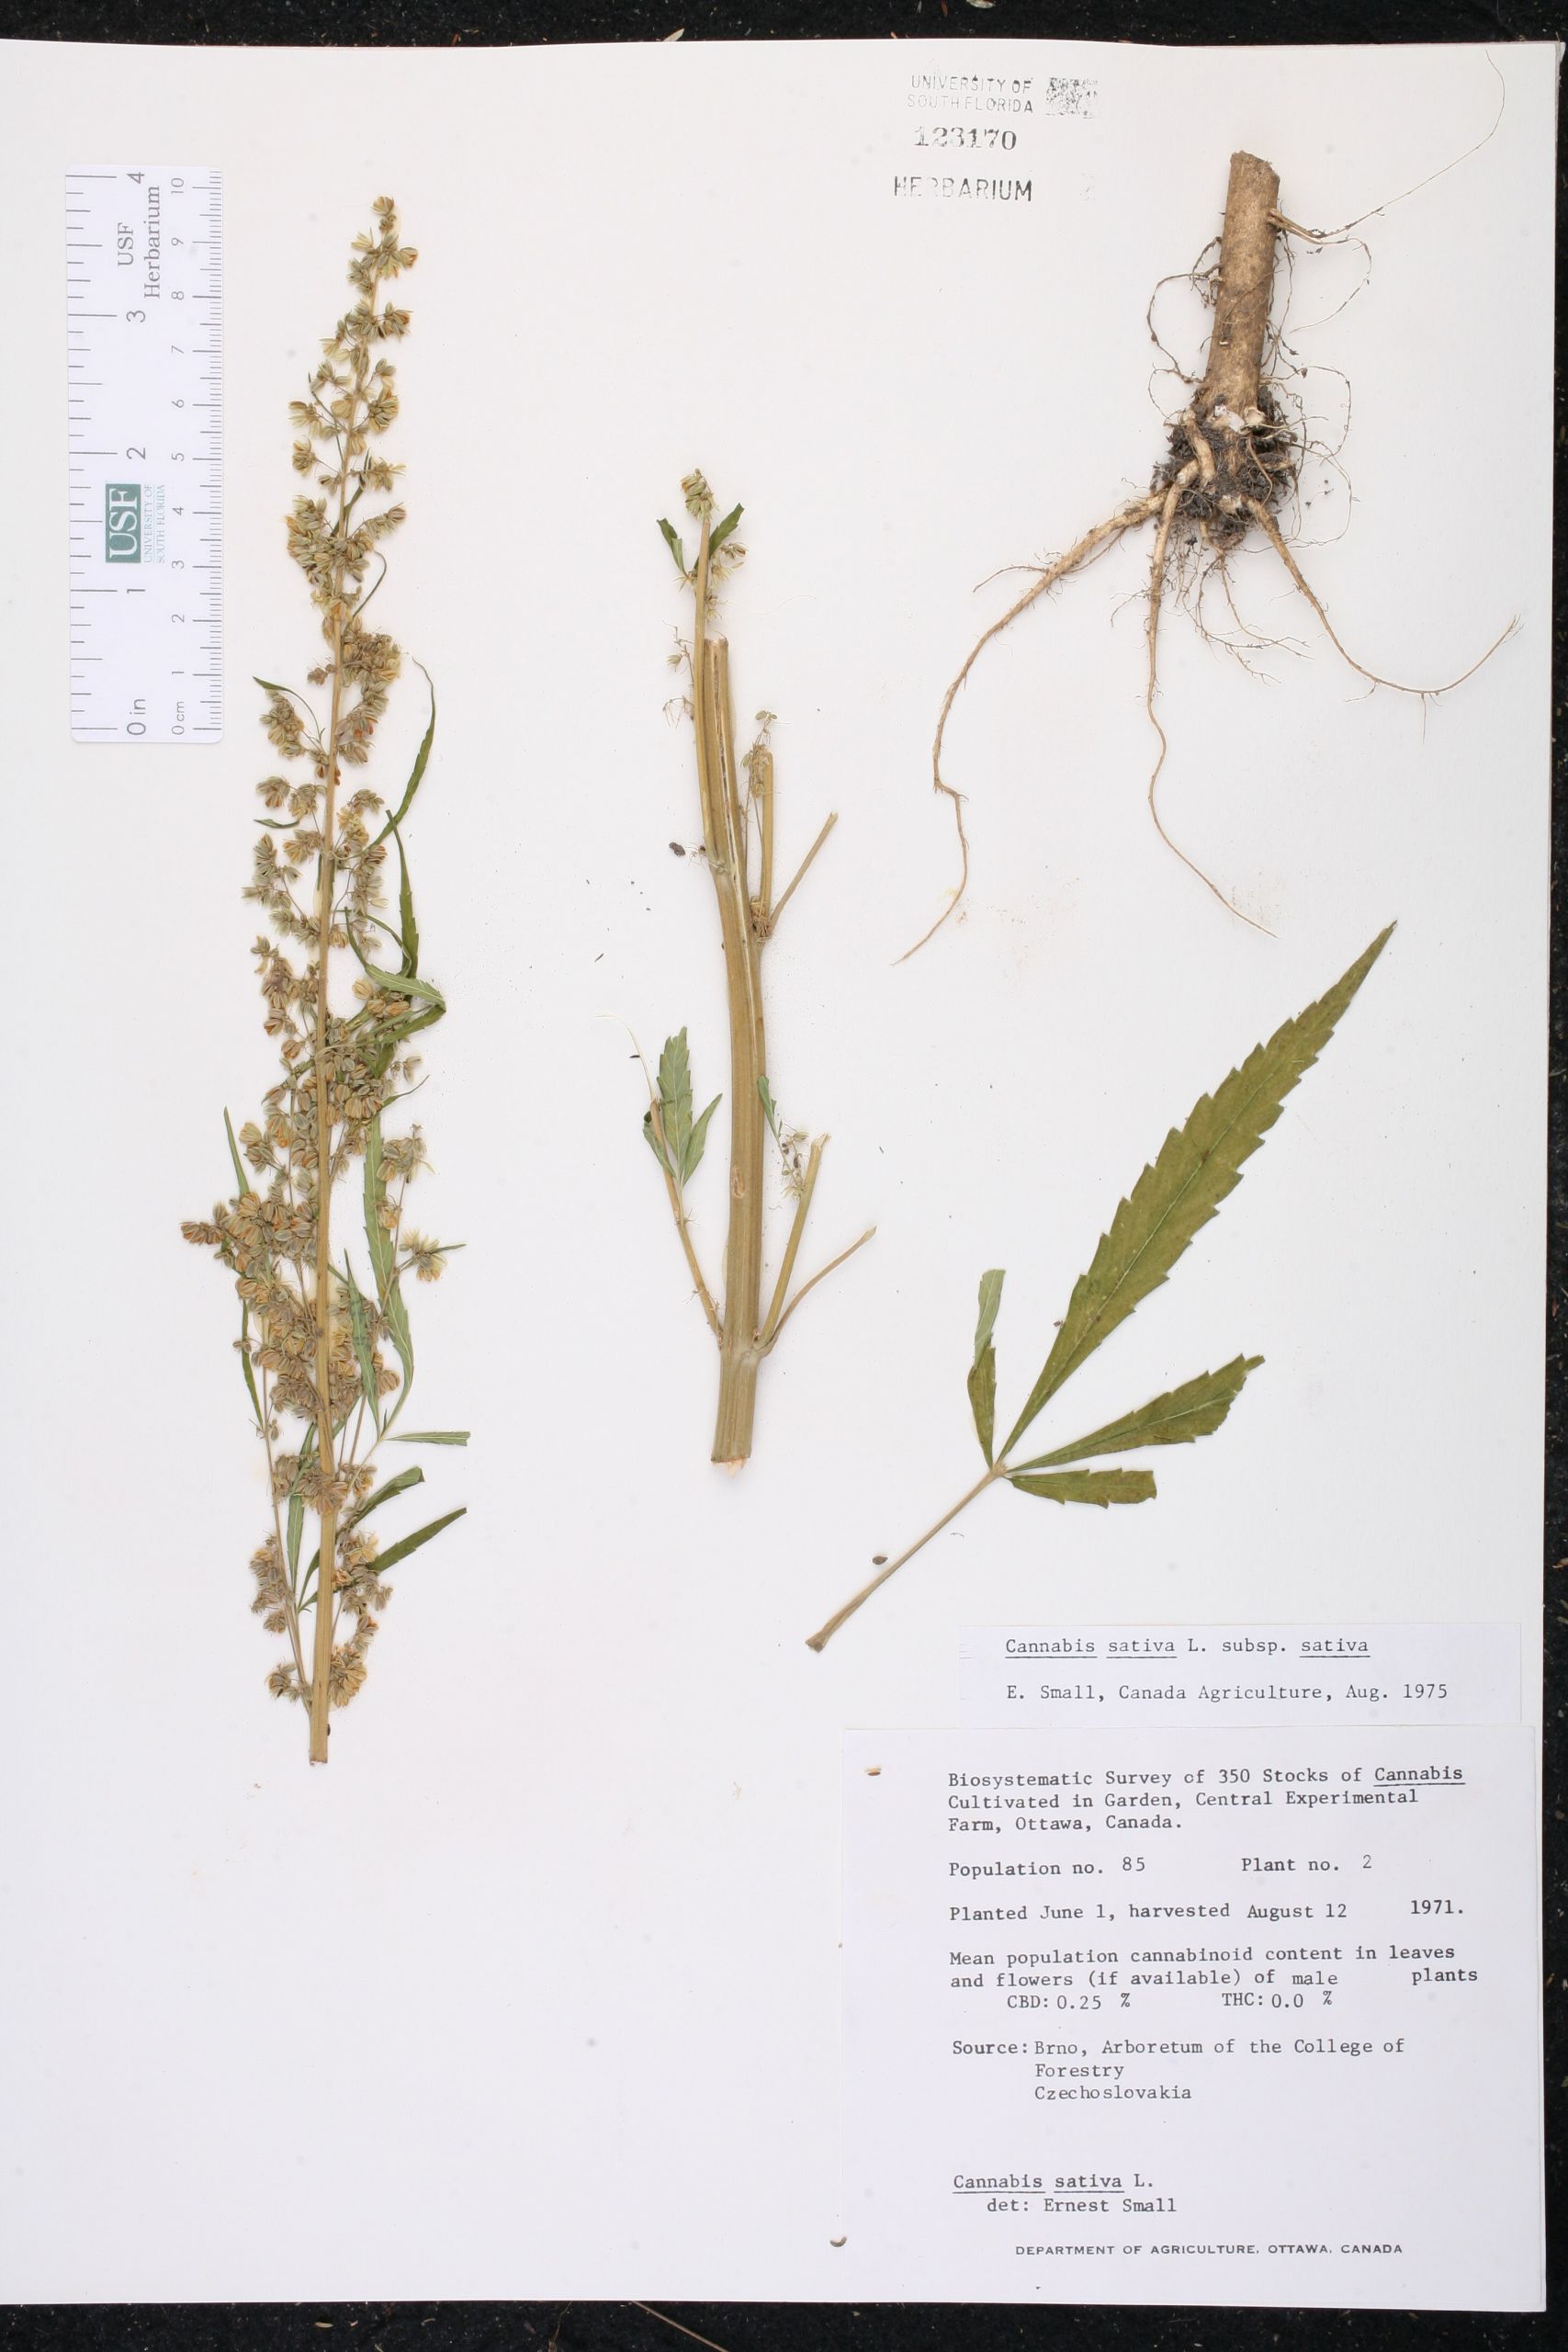 Botanischer Garten Bonn Luxus Cannabis Sativa Species Page isb atlas Of Florida Plants